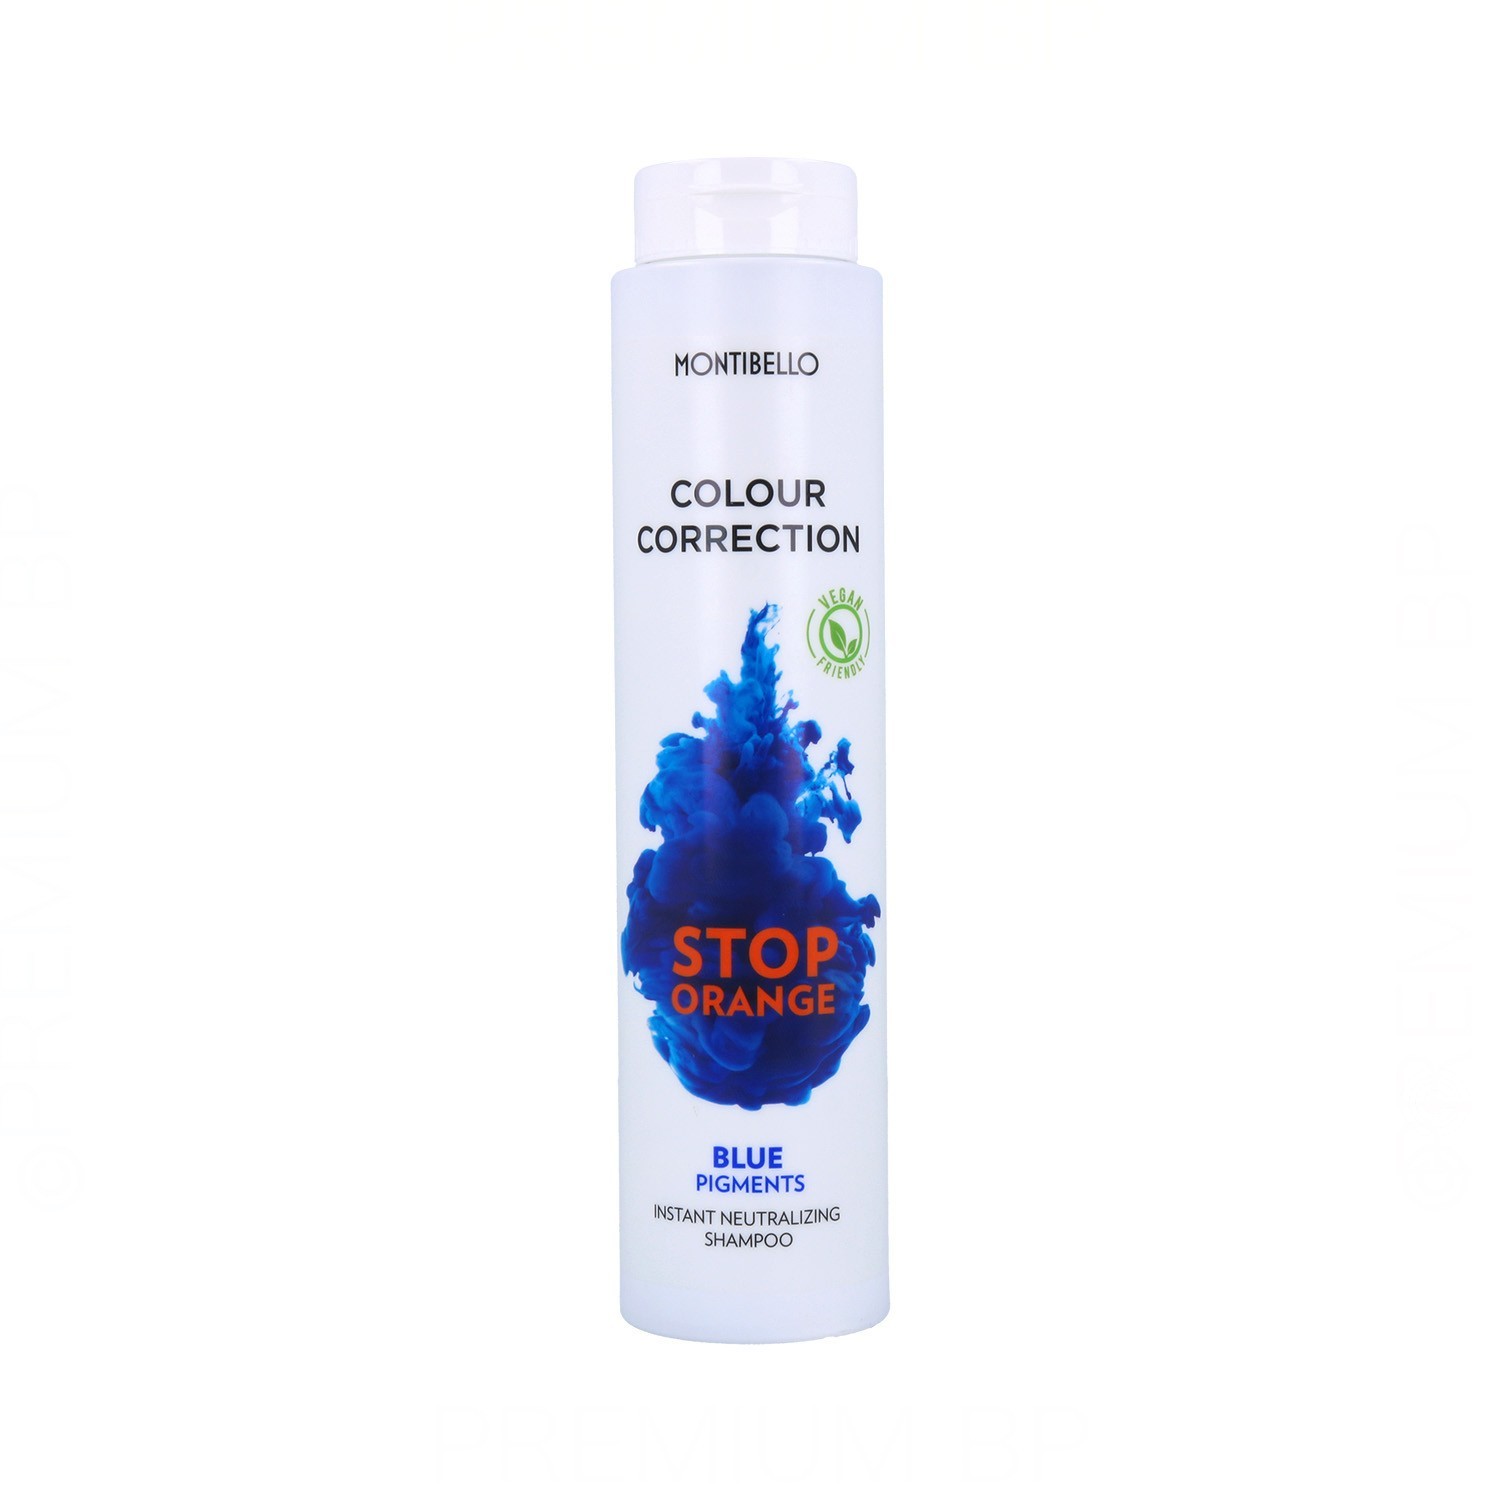 Montibello Colour Correction Stop Orange Pigmento Blu Shampoo 300 ml